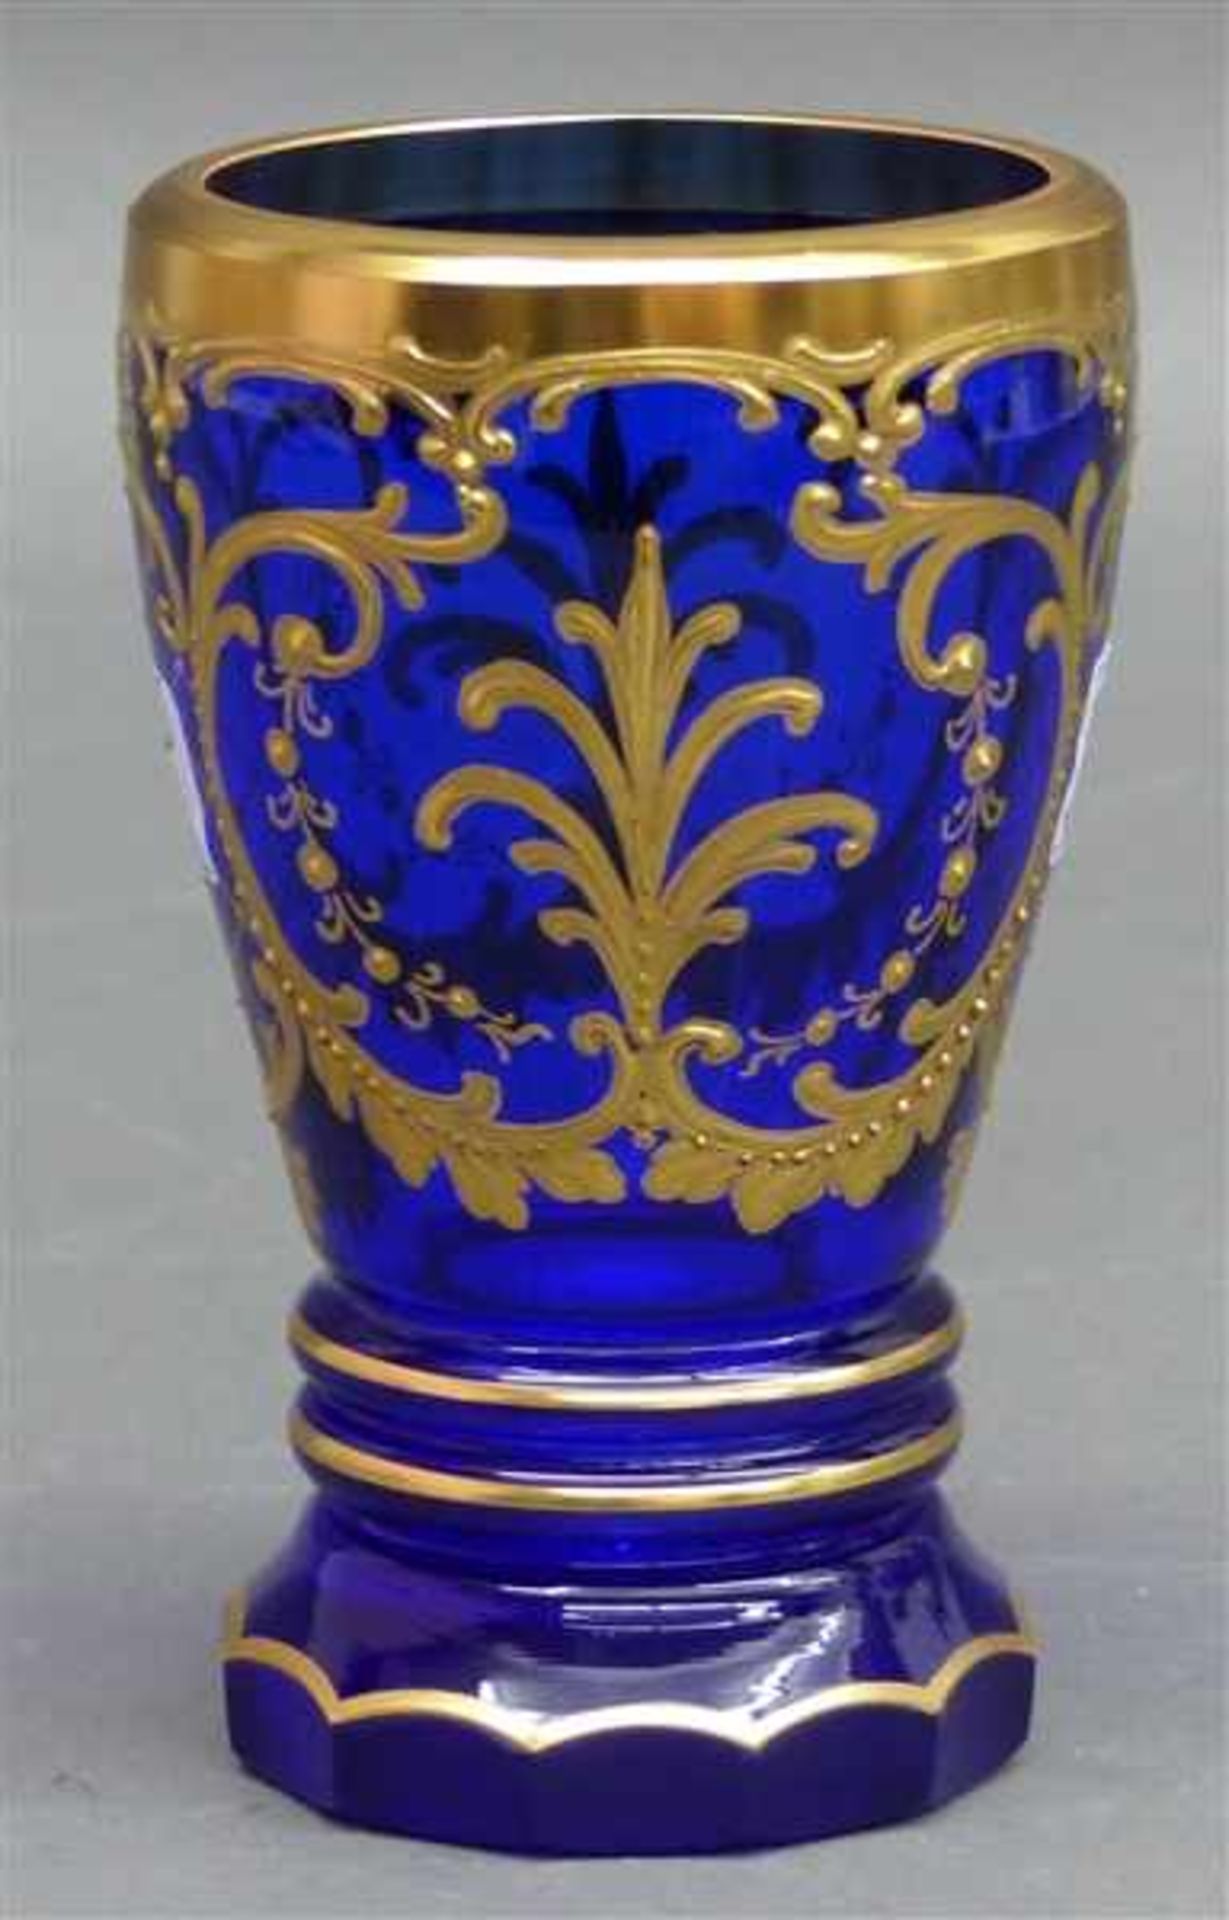 Freundschaftsbecherkobaltblaues Glas, aufwändiger Golddekor, Bayerischer Wald, 20. Jh., h 13,5 cm,